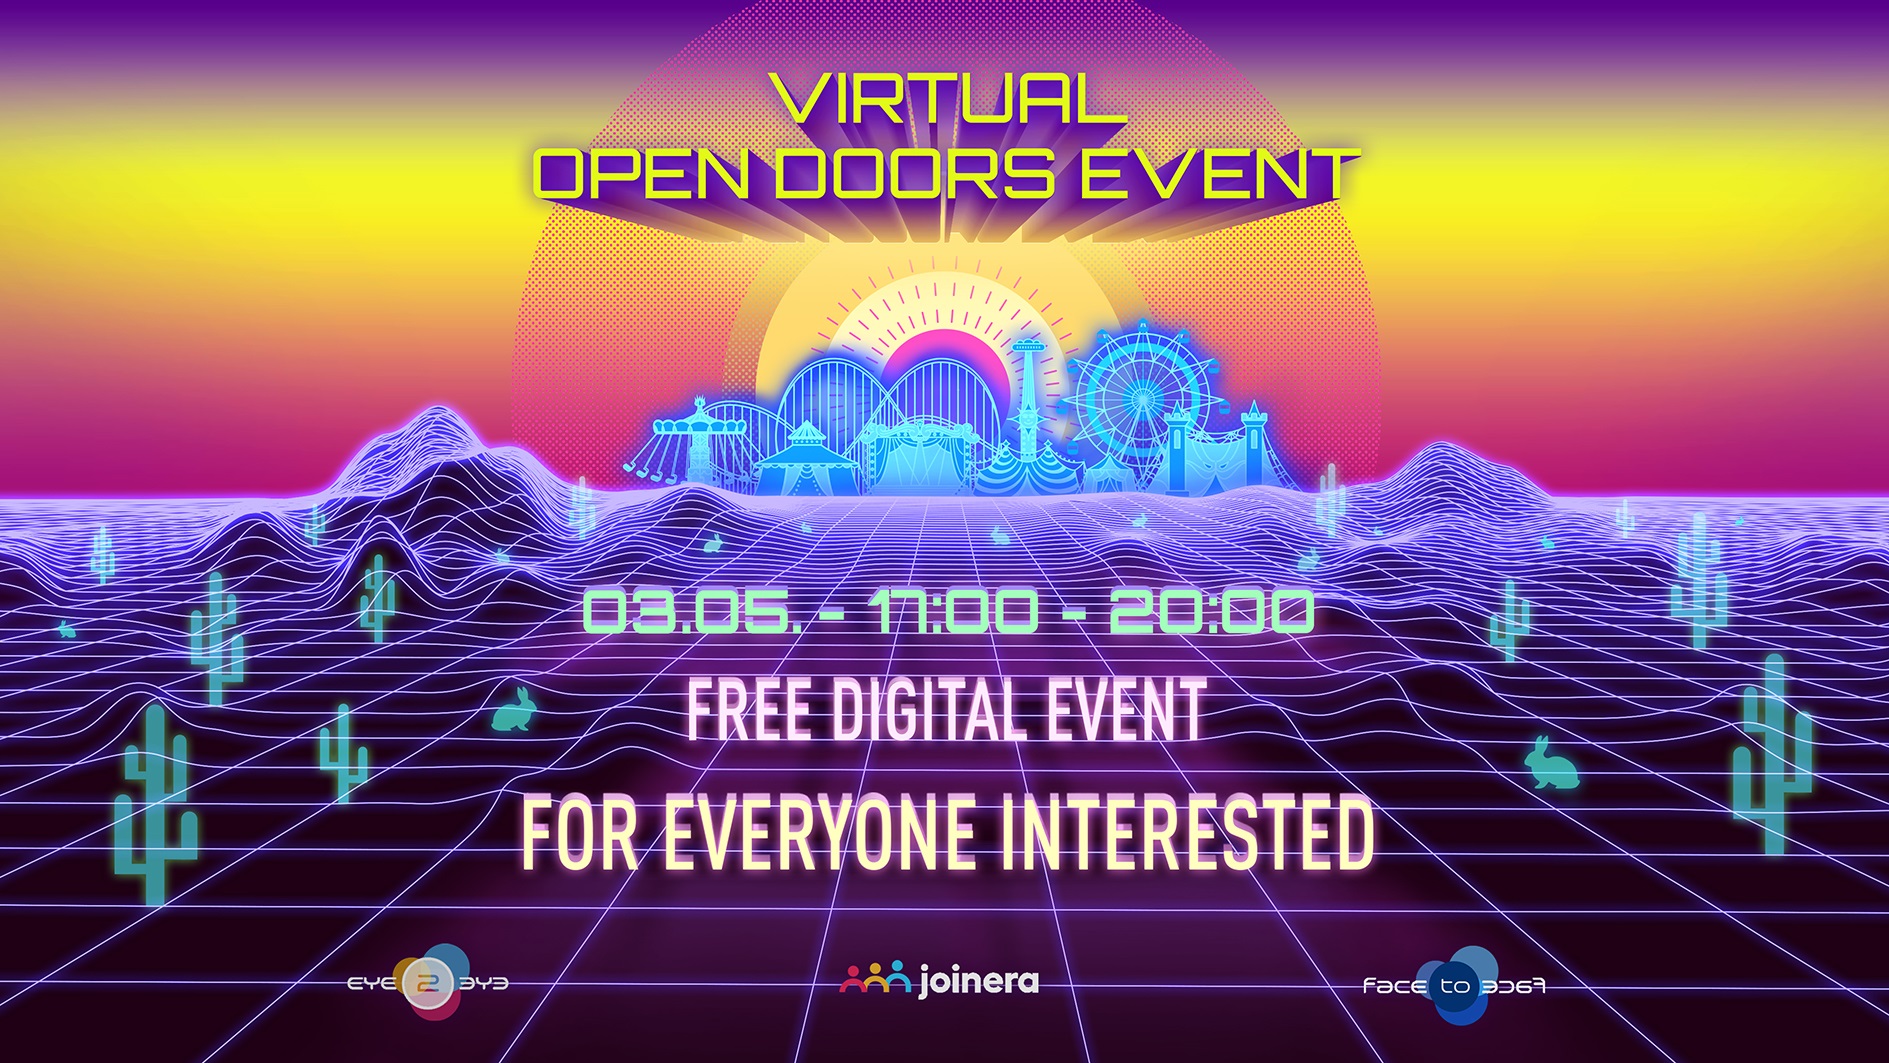 Virtual Open Doors Event - 03.05. 17:00 - 20:00 Uhr